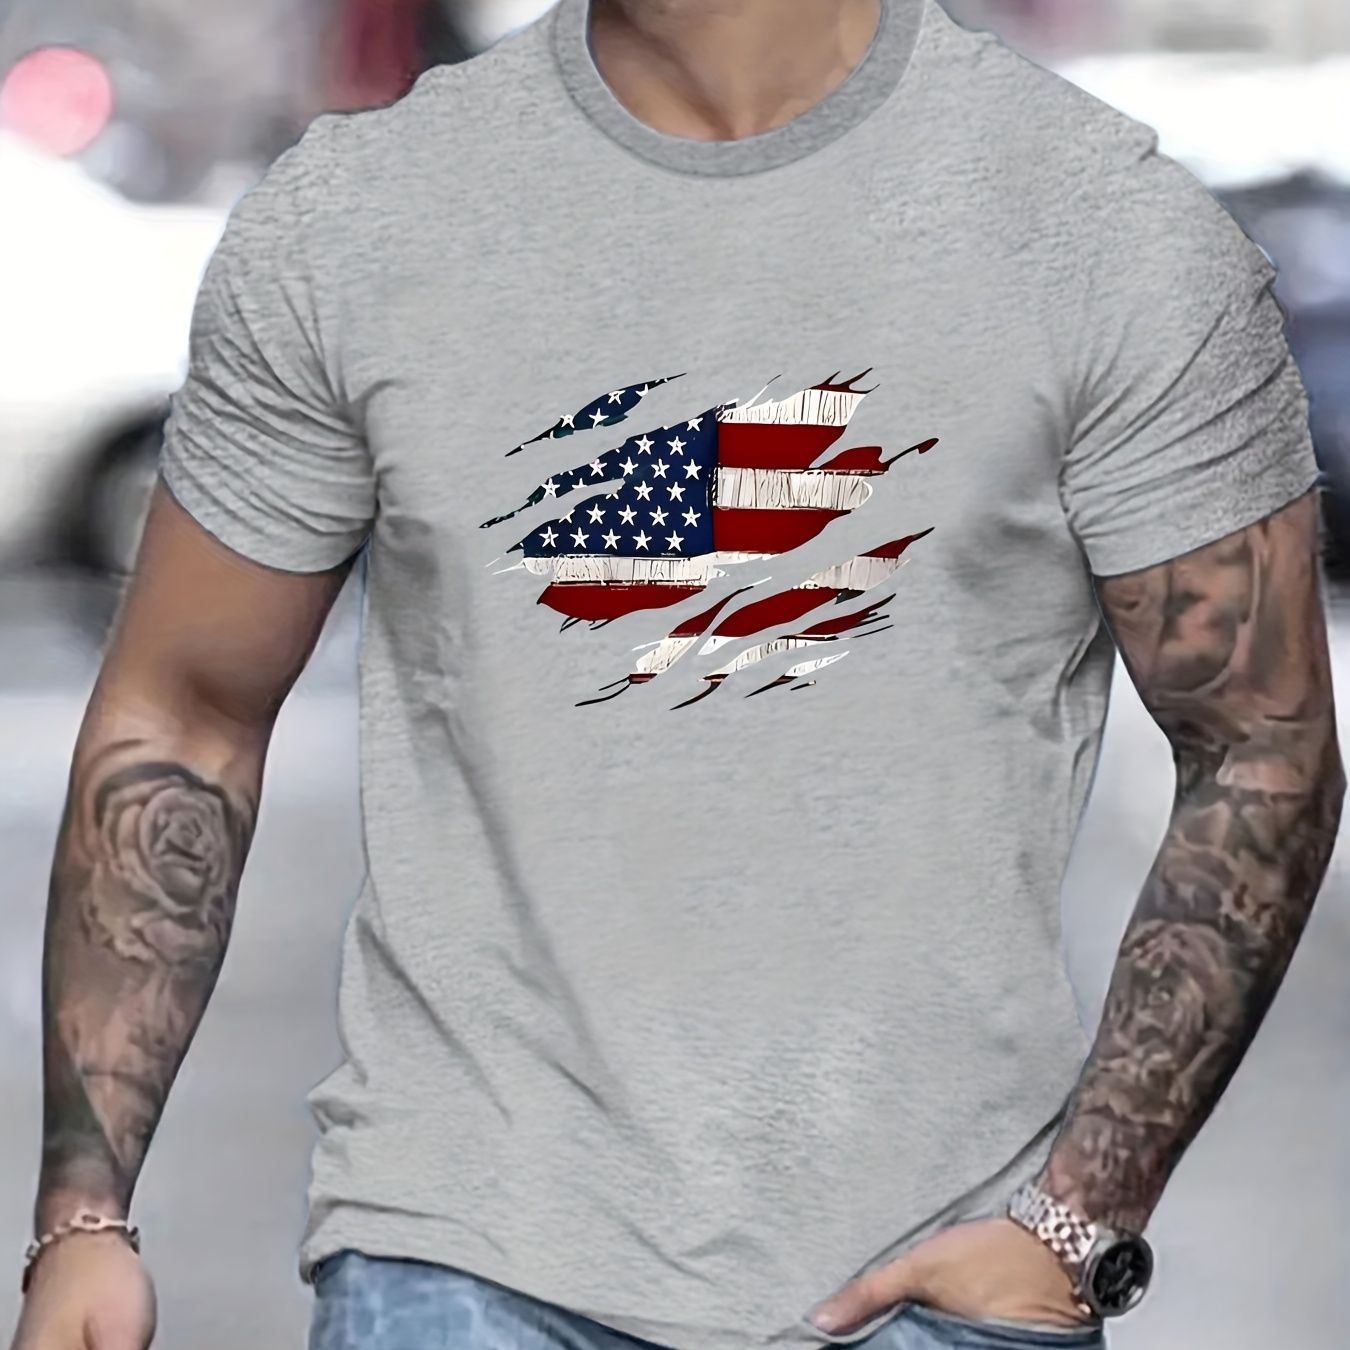 

Us Flag Print T Shirt, Tees For Men, Casual Short Sleeve T-shirt For Summer